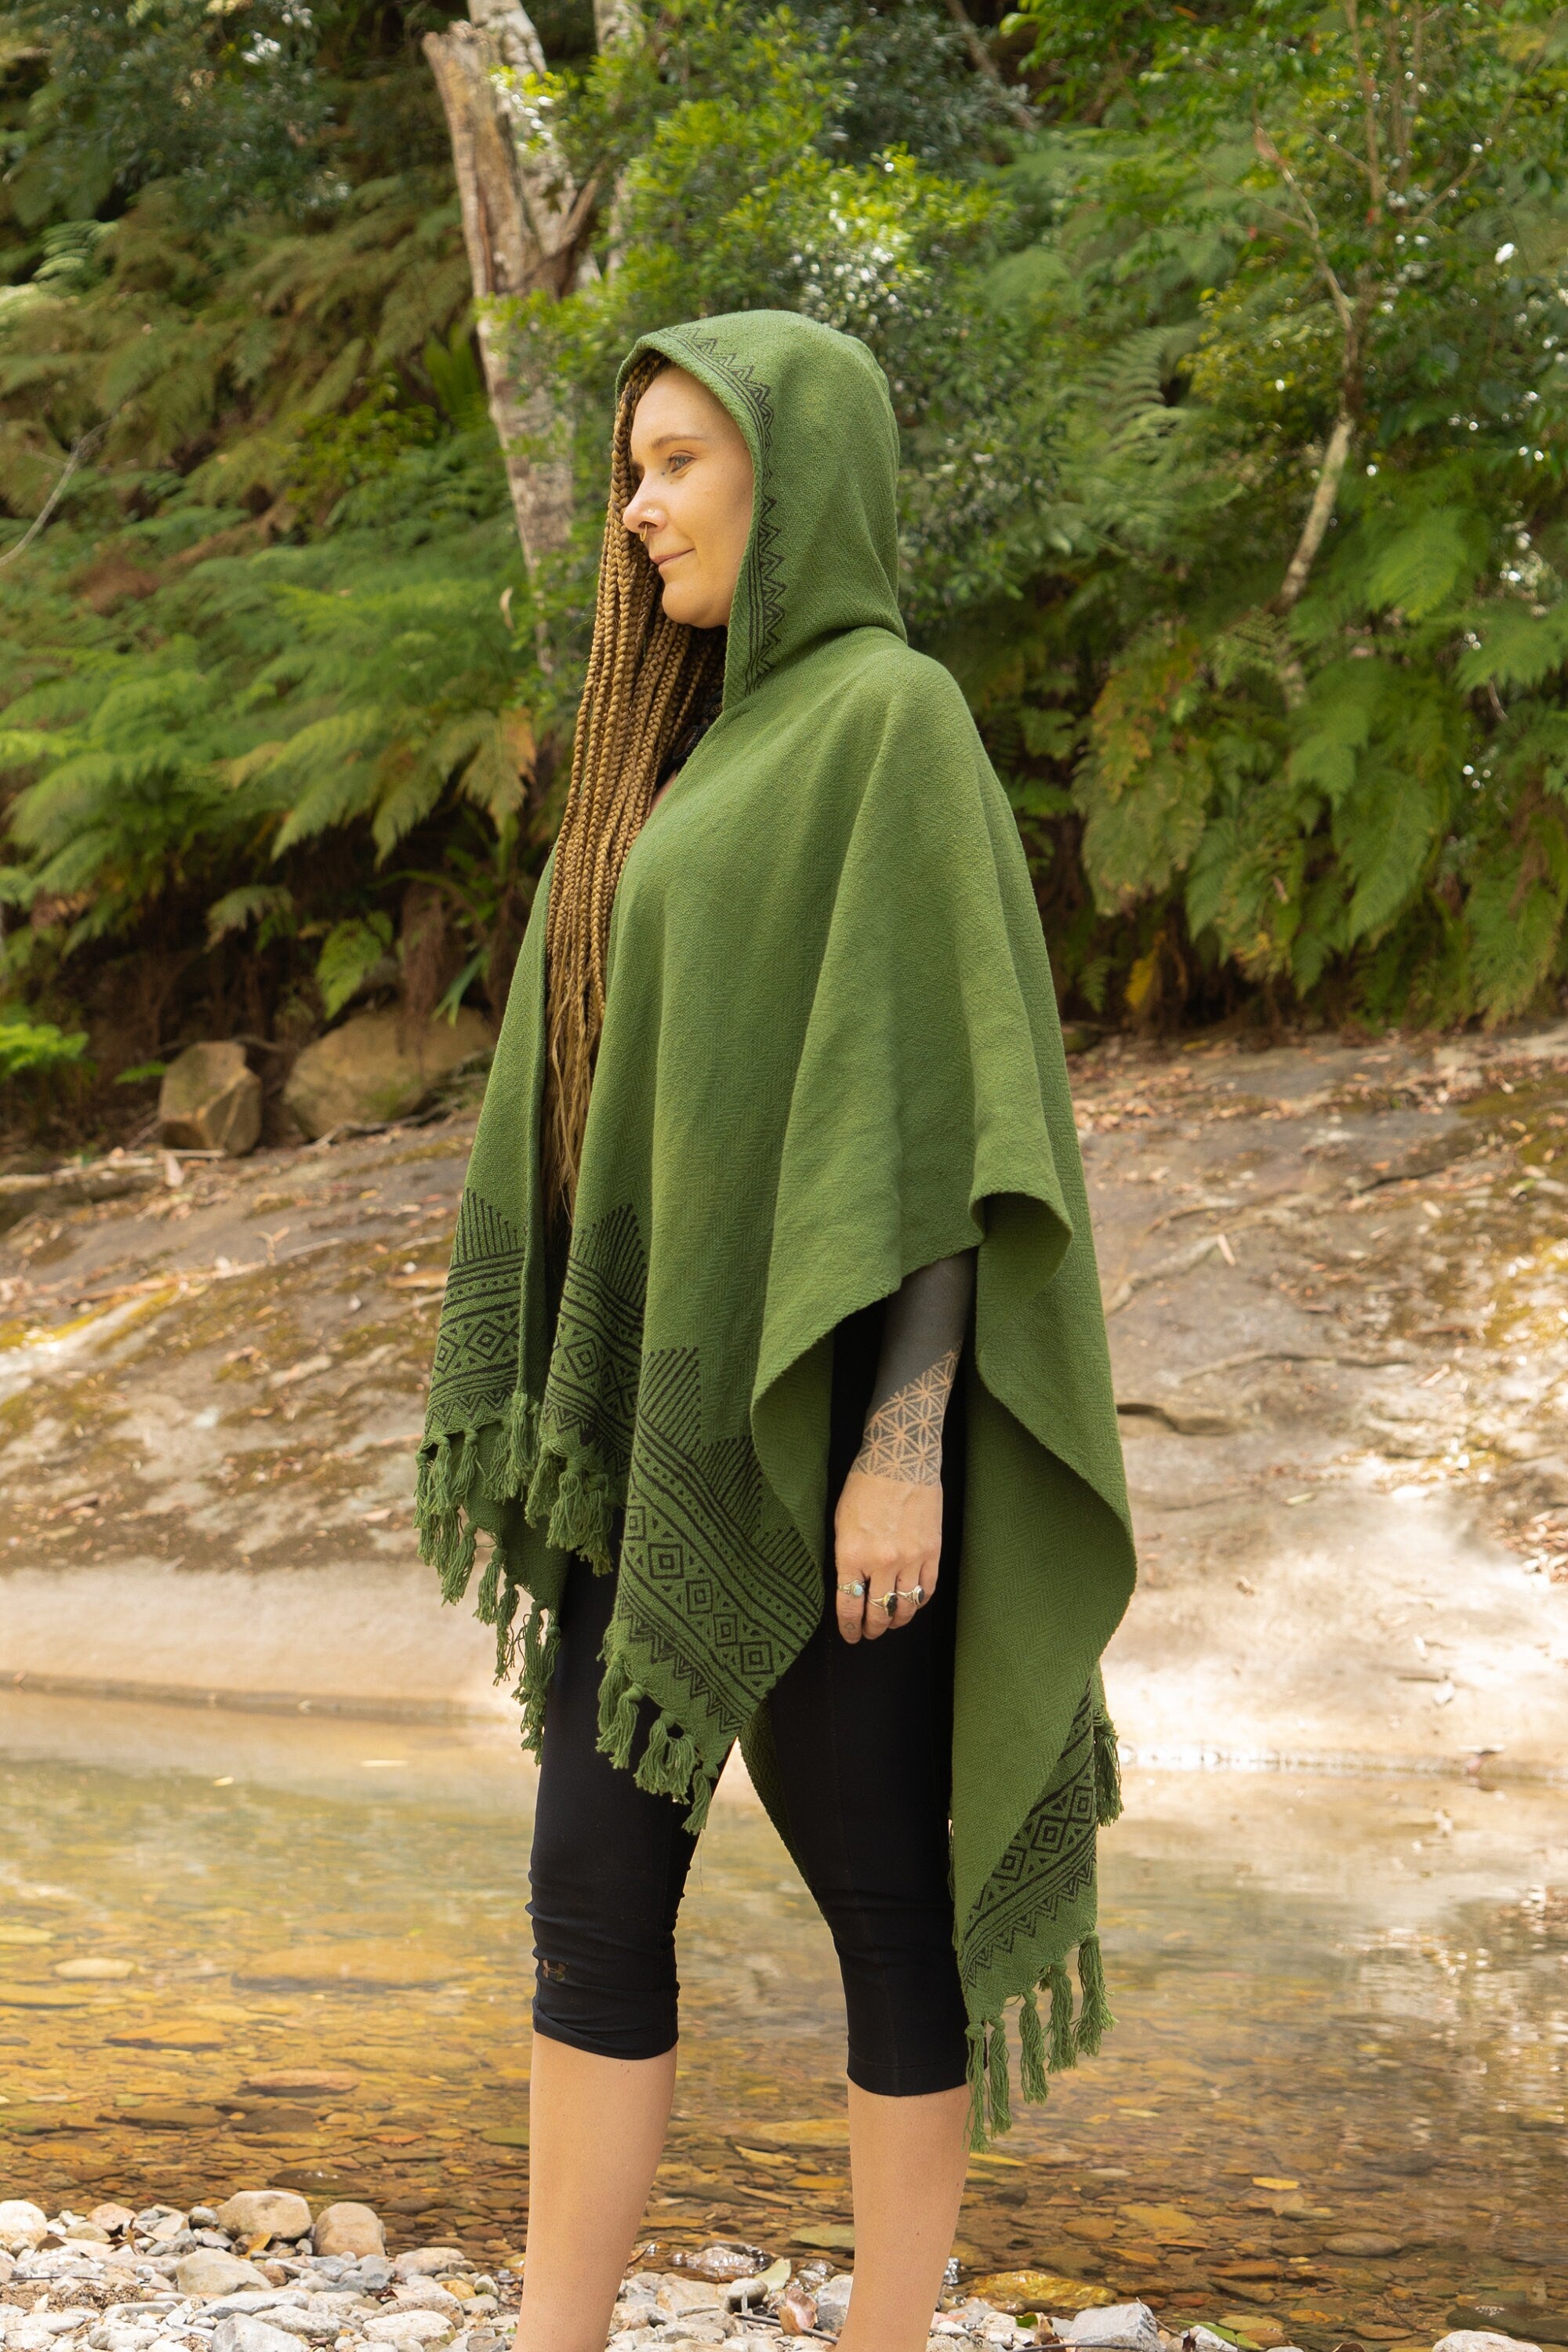 ANAGAMI Hooded Kimono Sage Green Cape Poncho Robe Block Printed Natural Dyed Ceremony Ritual Shaman Tribal Alchemy Sacred Shawl AJJAYA